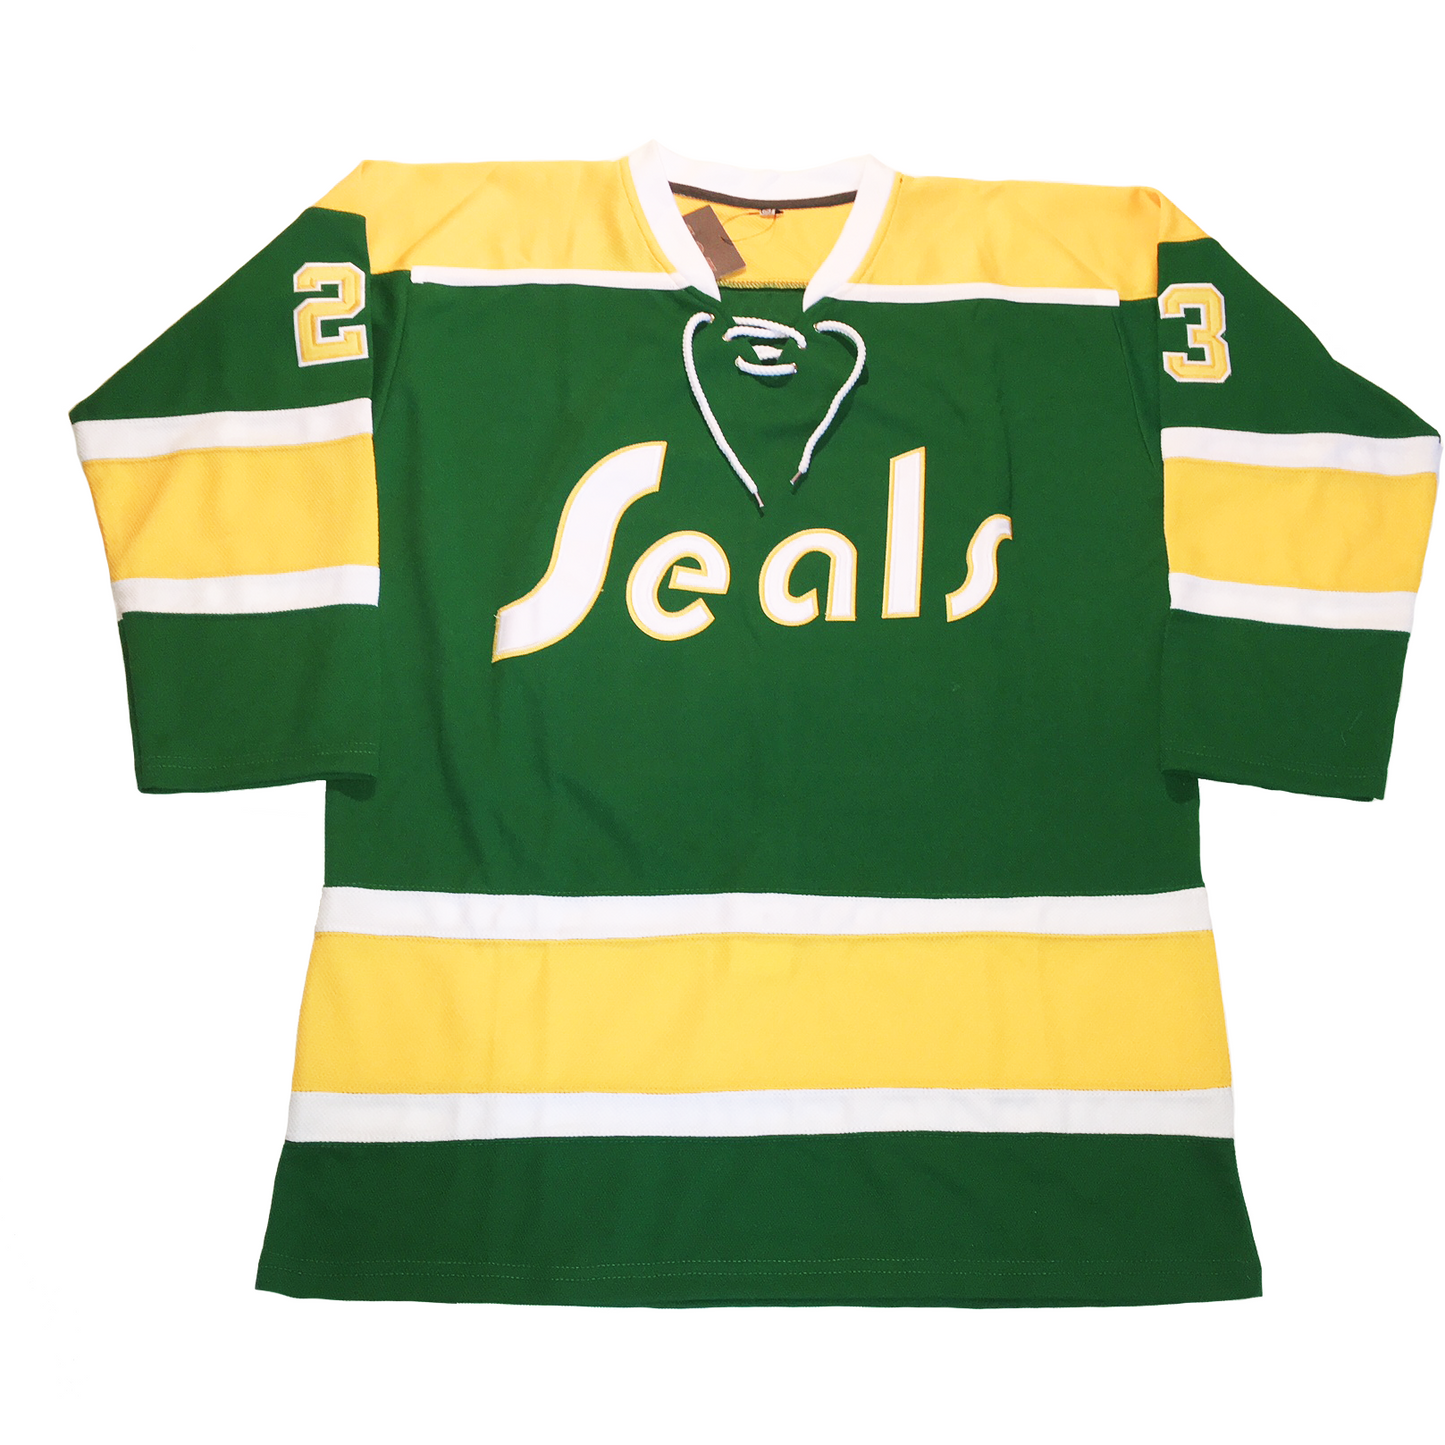 Oakland Seals Jersey - Green (alternate) - XS - Royal Retros